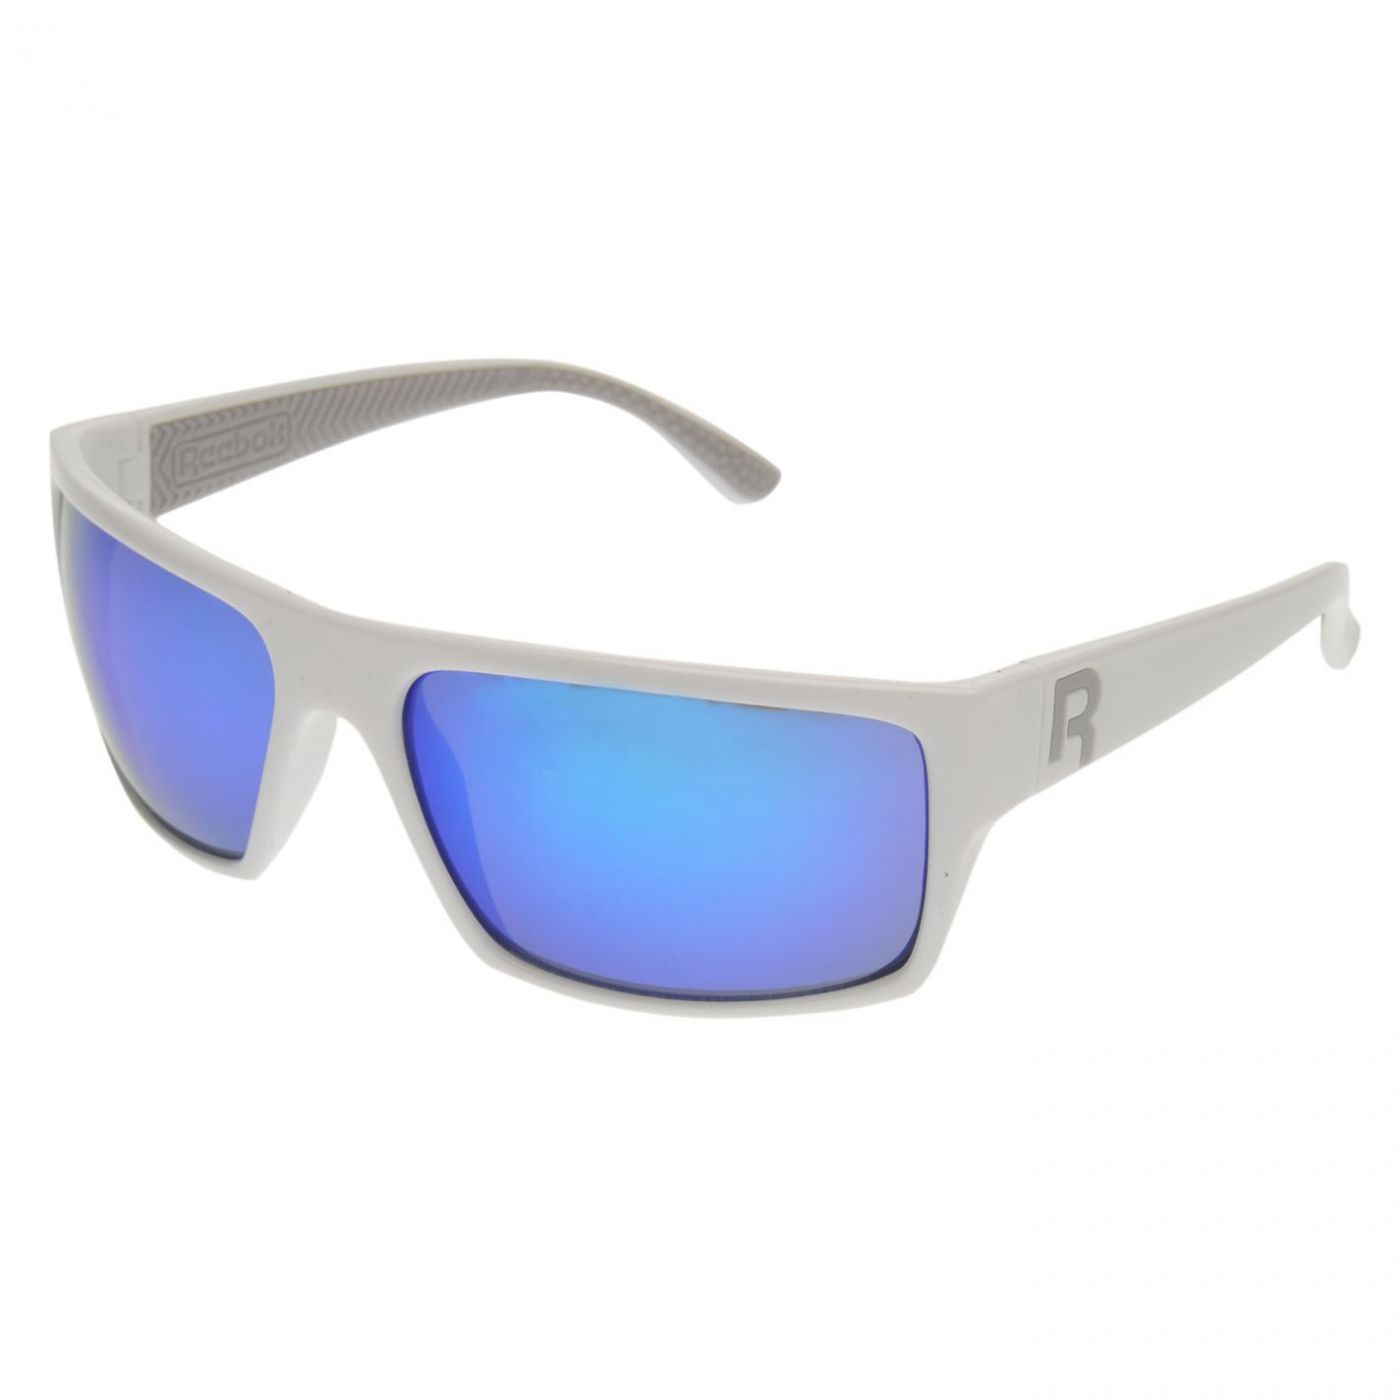 Buy \u003e reebok classic 4 sunglasses Limit 